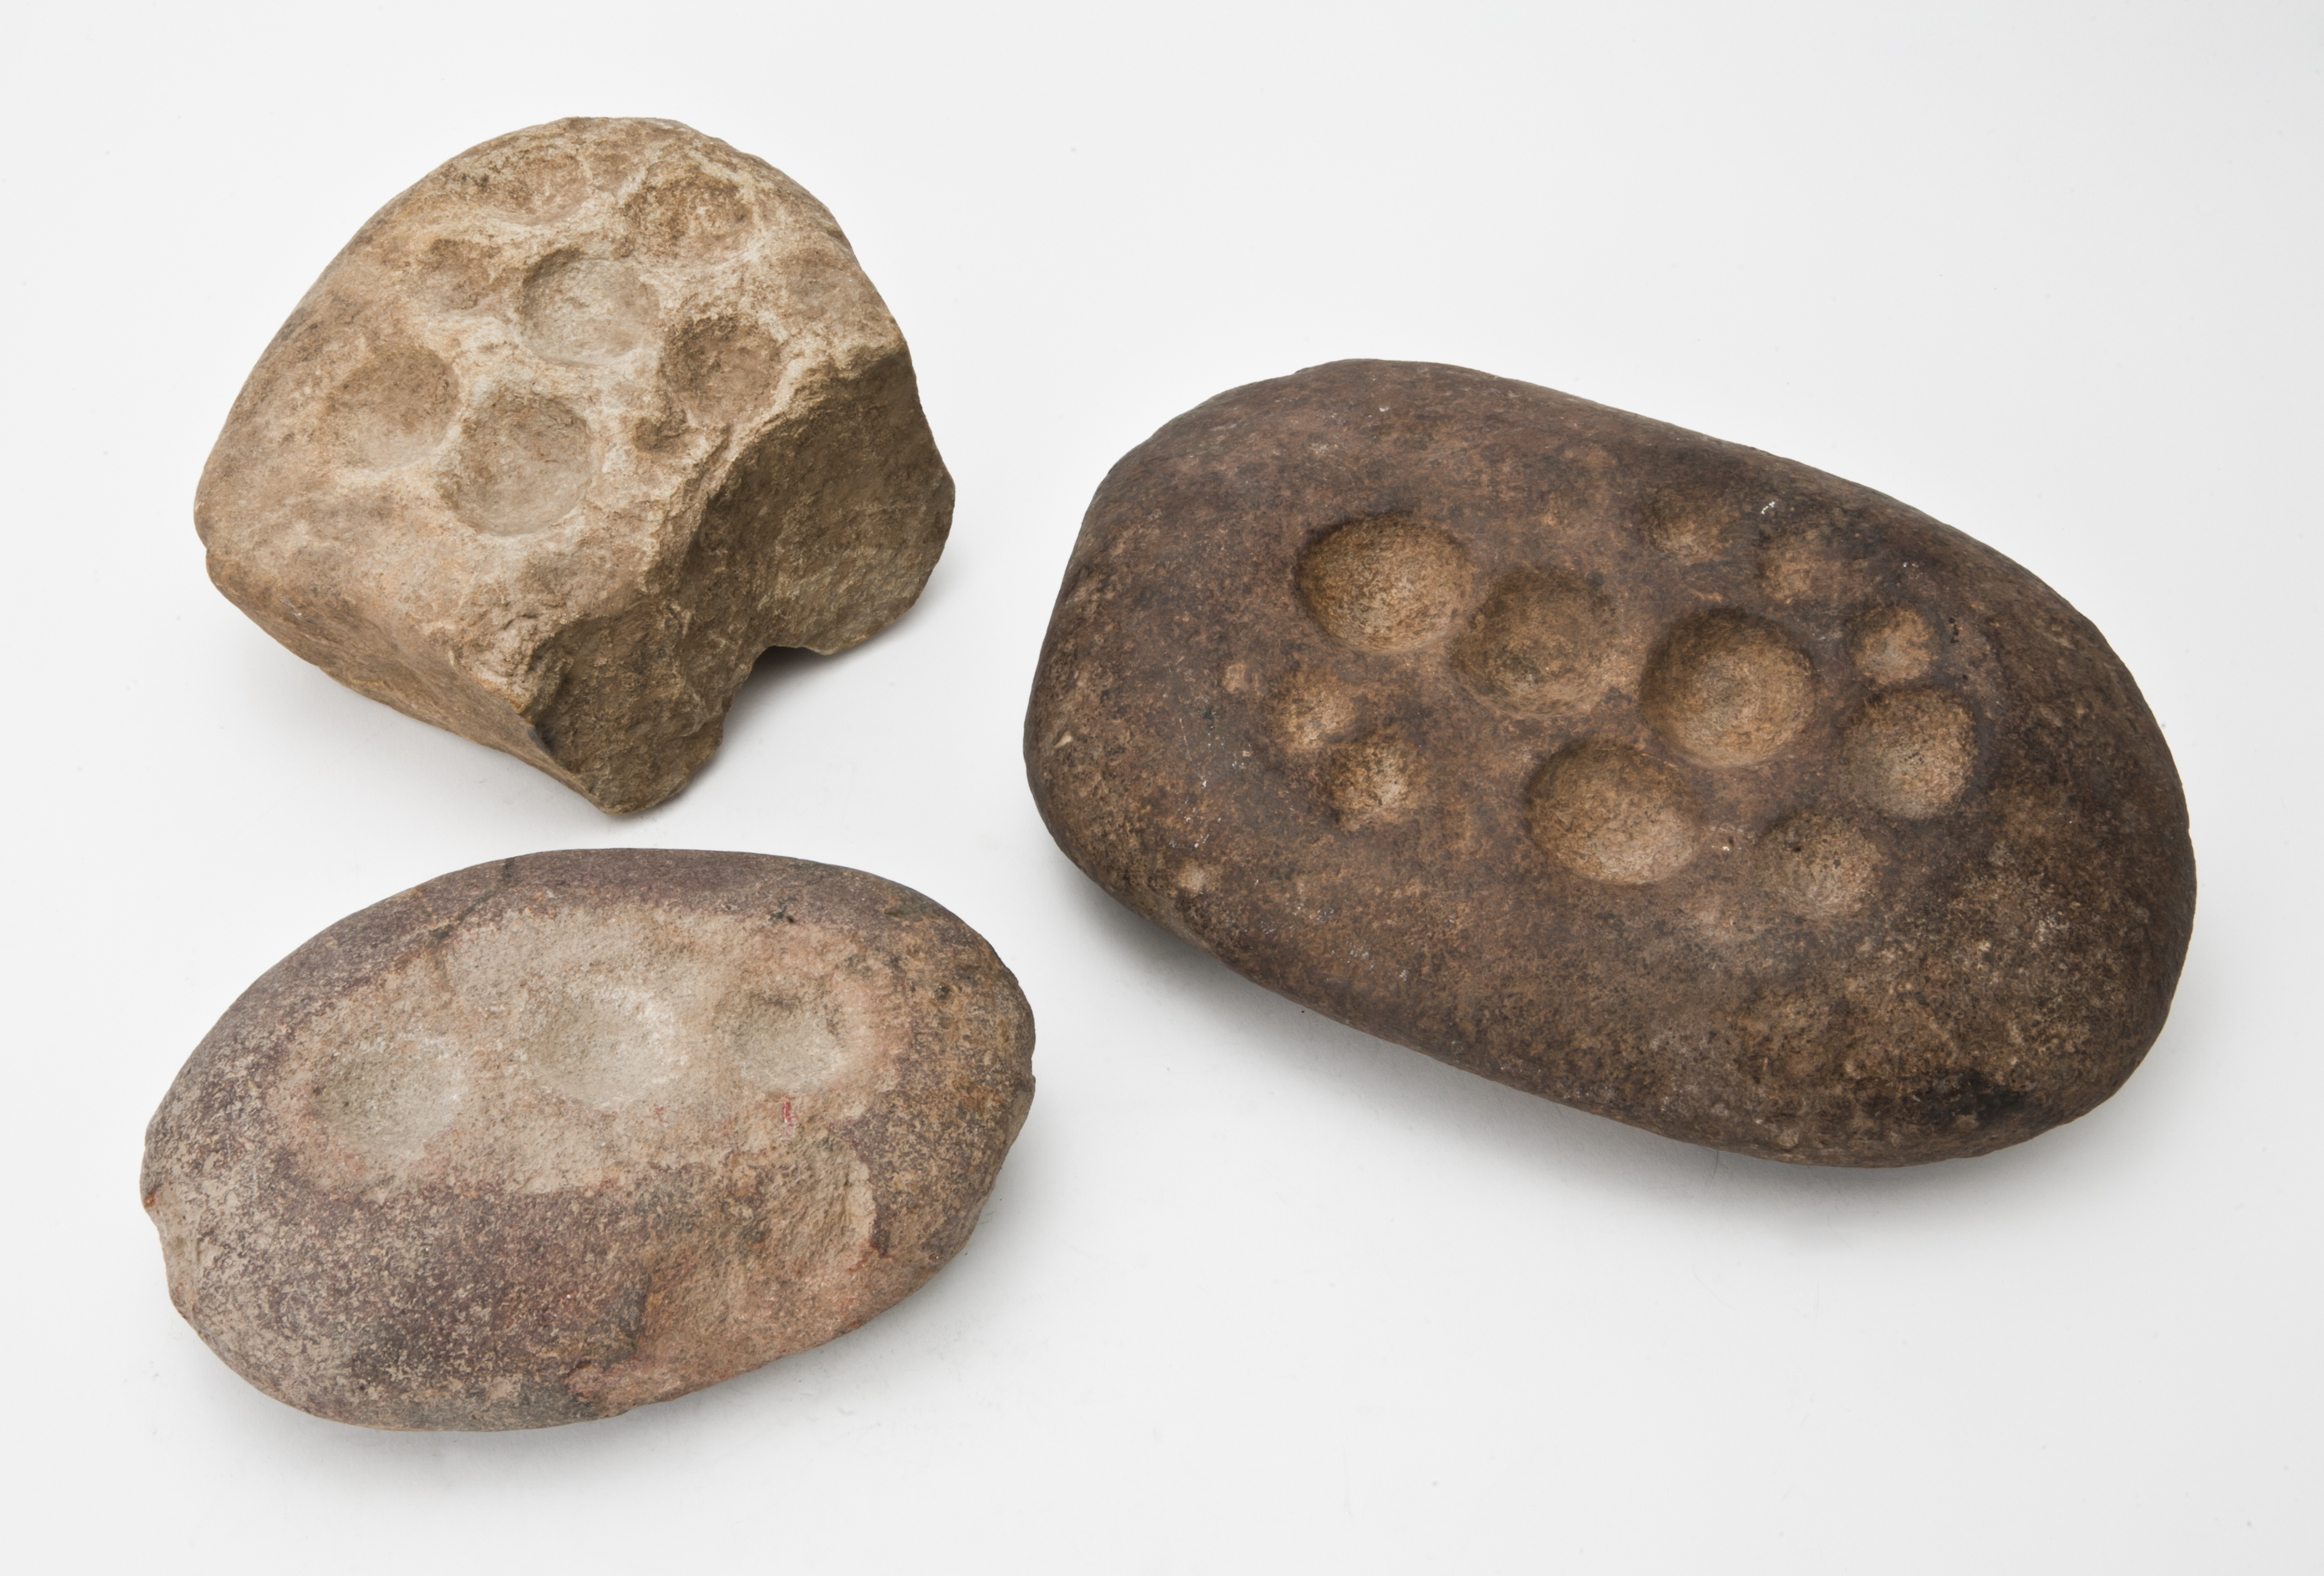 NM Nutting Stones at the Leavenworth Nutcracker Museum